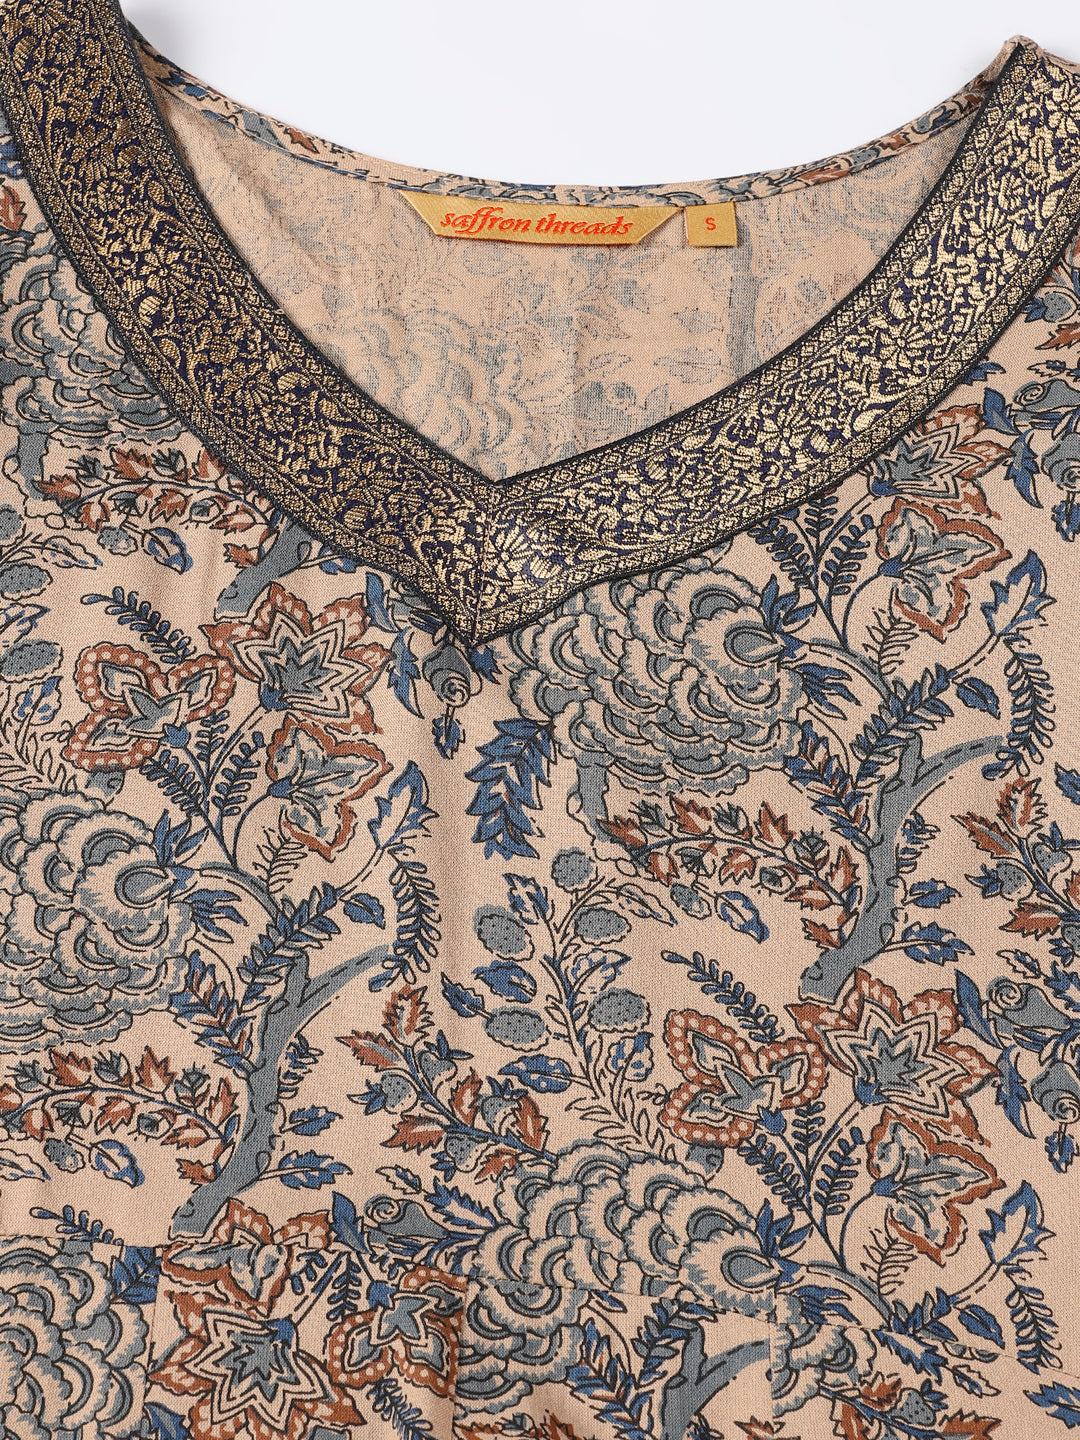 Beige Ethnic Floral Print Anarkali Kurta with Brocade Lace Details